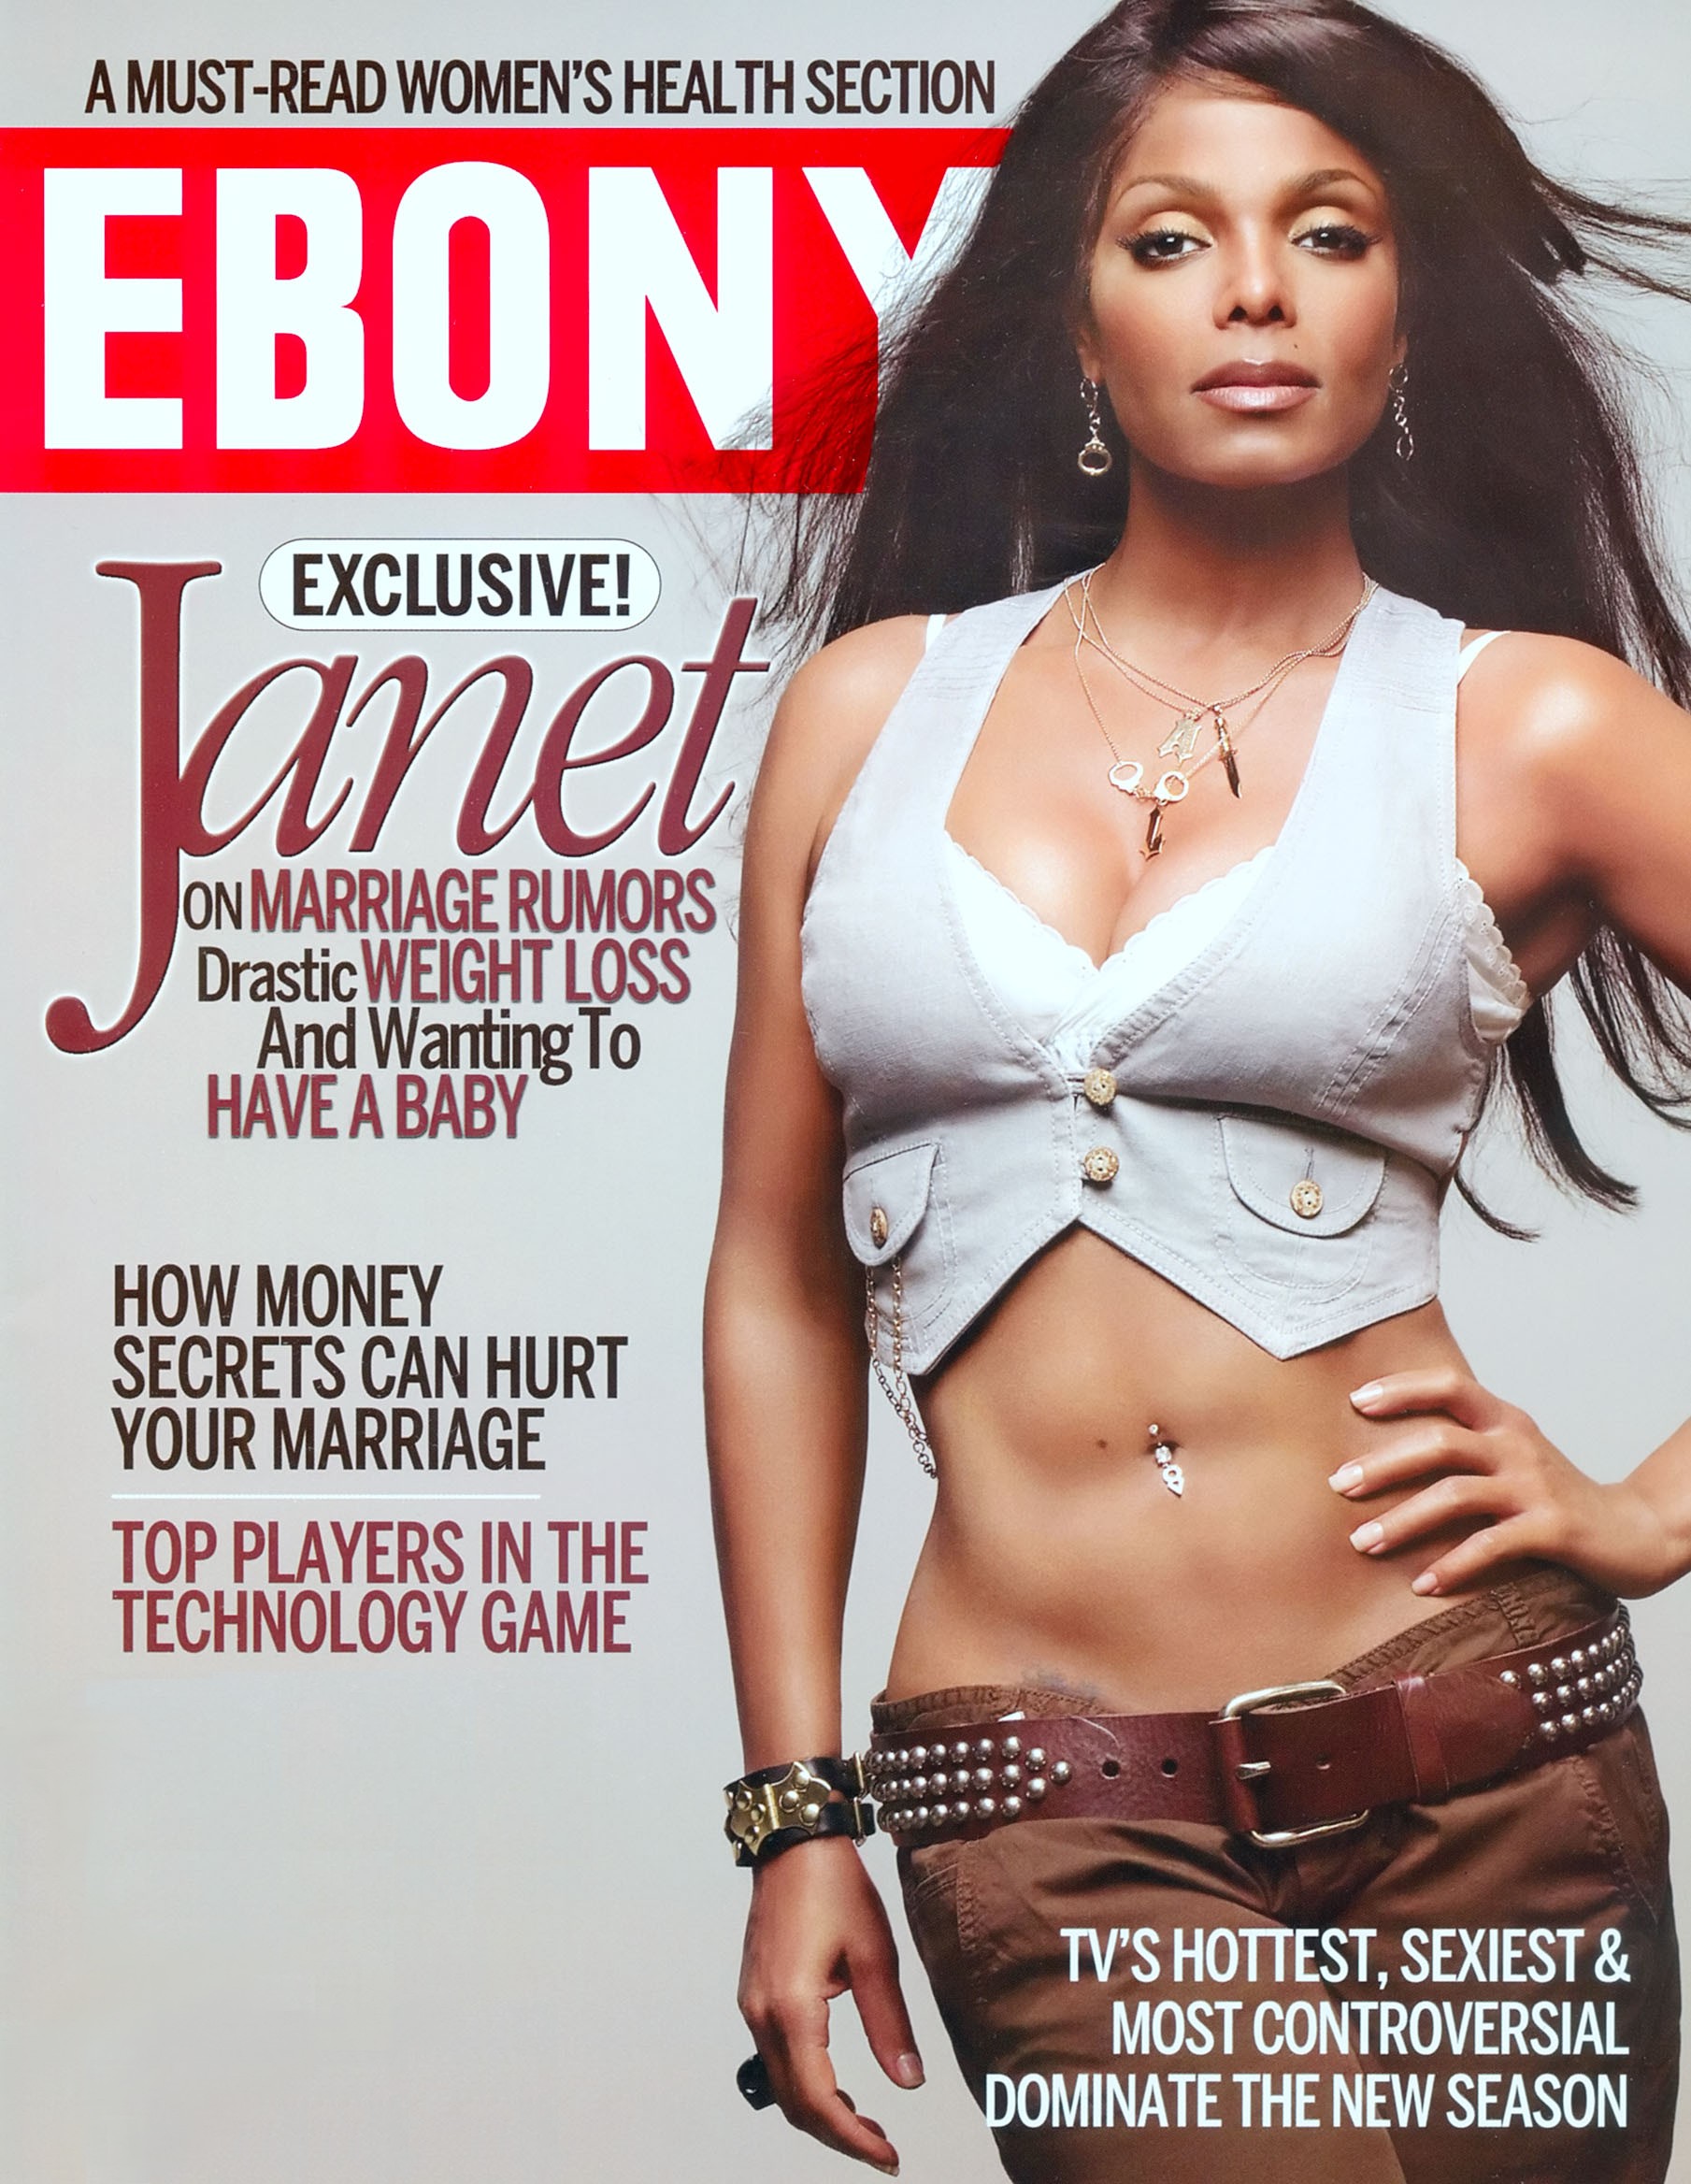 Ebony magazine covers featuring female singers